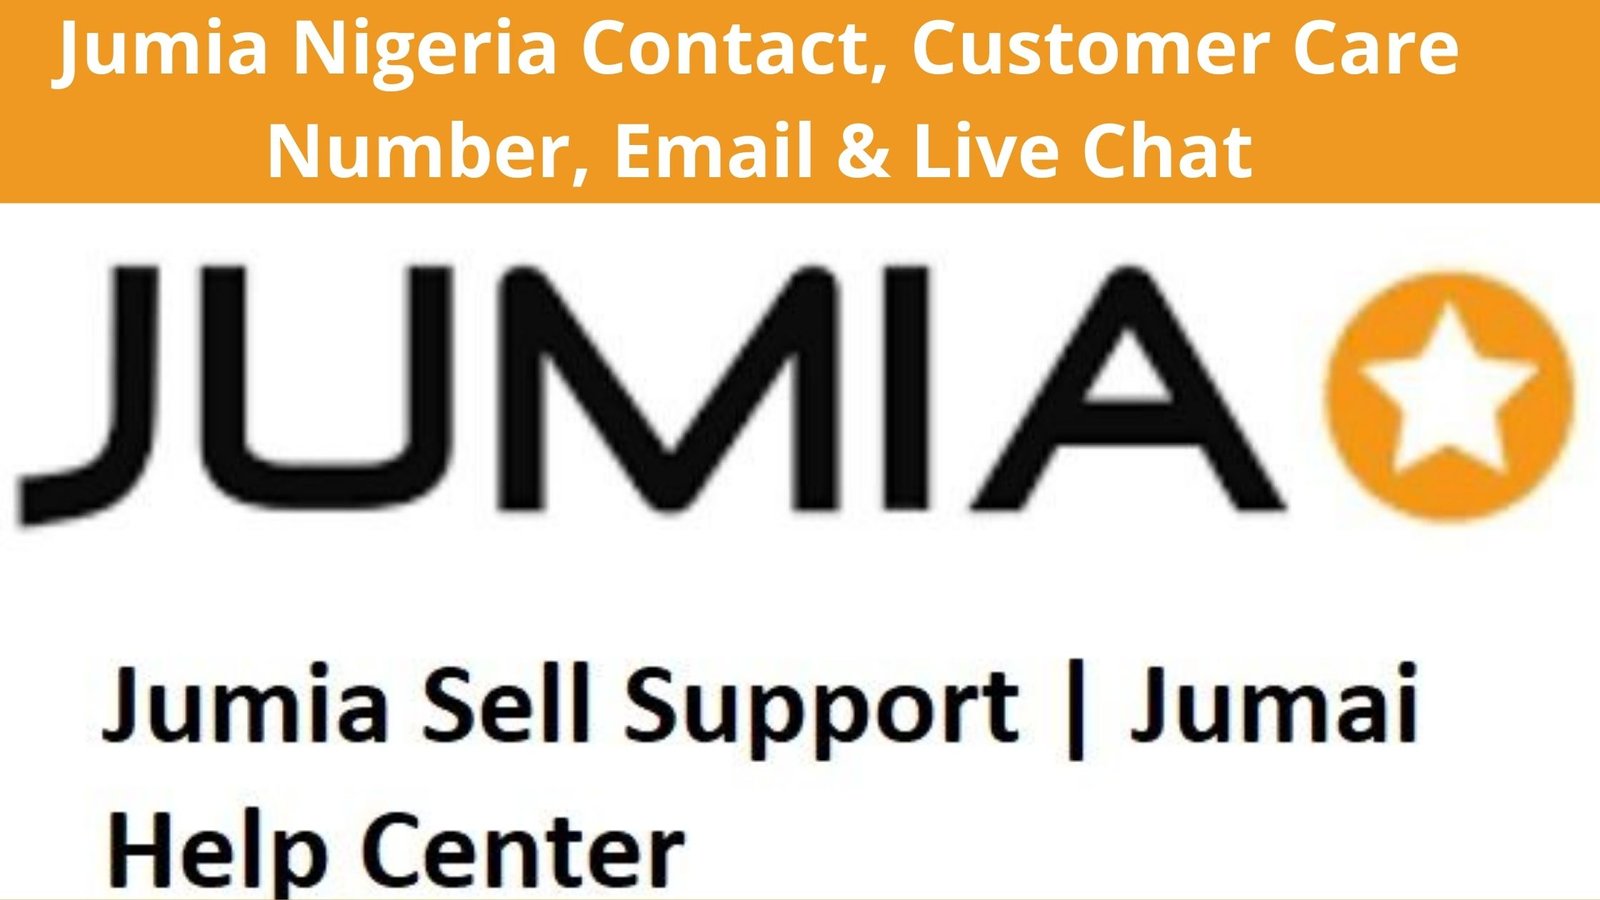 Jumia Nigeria Contact